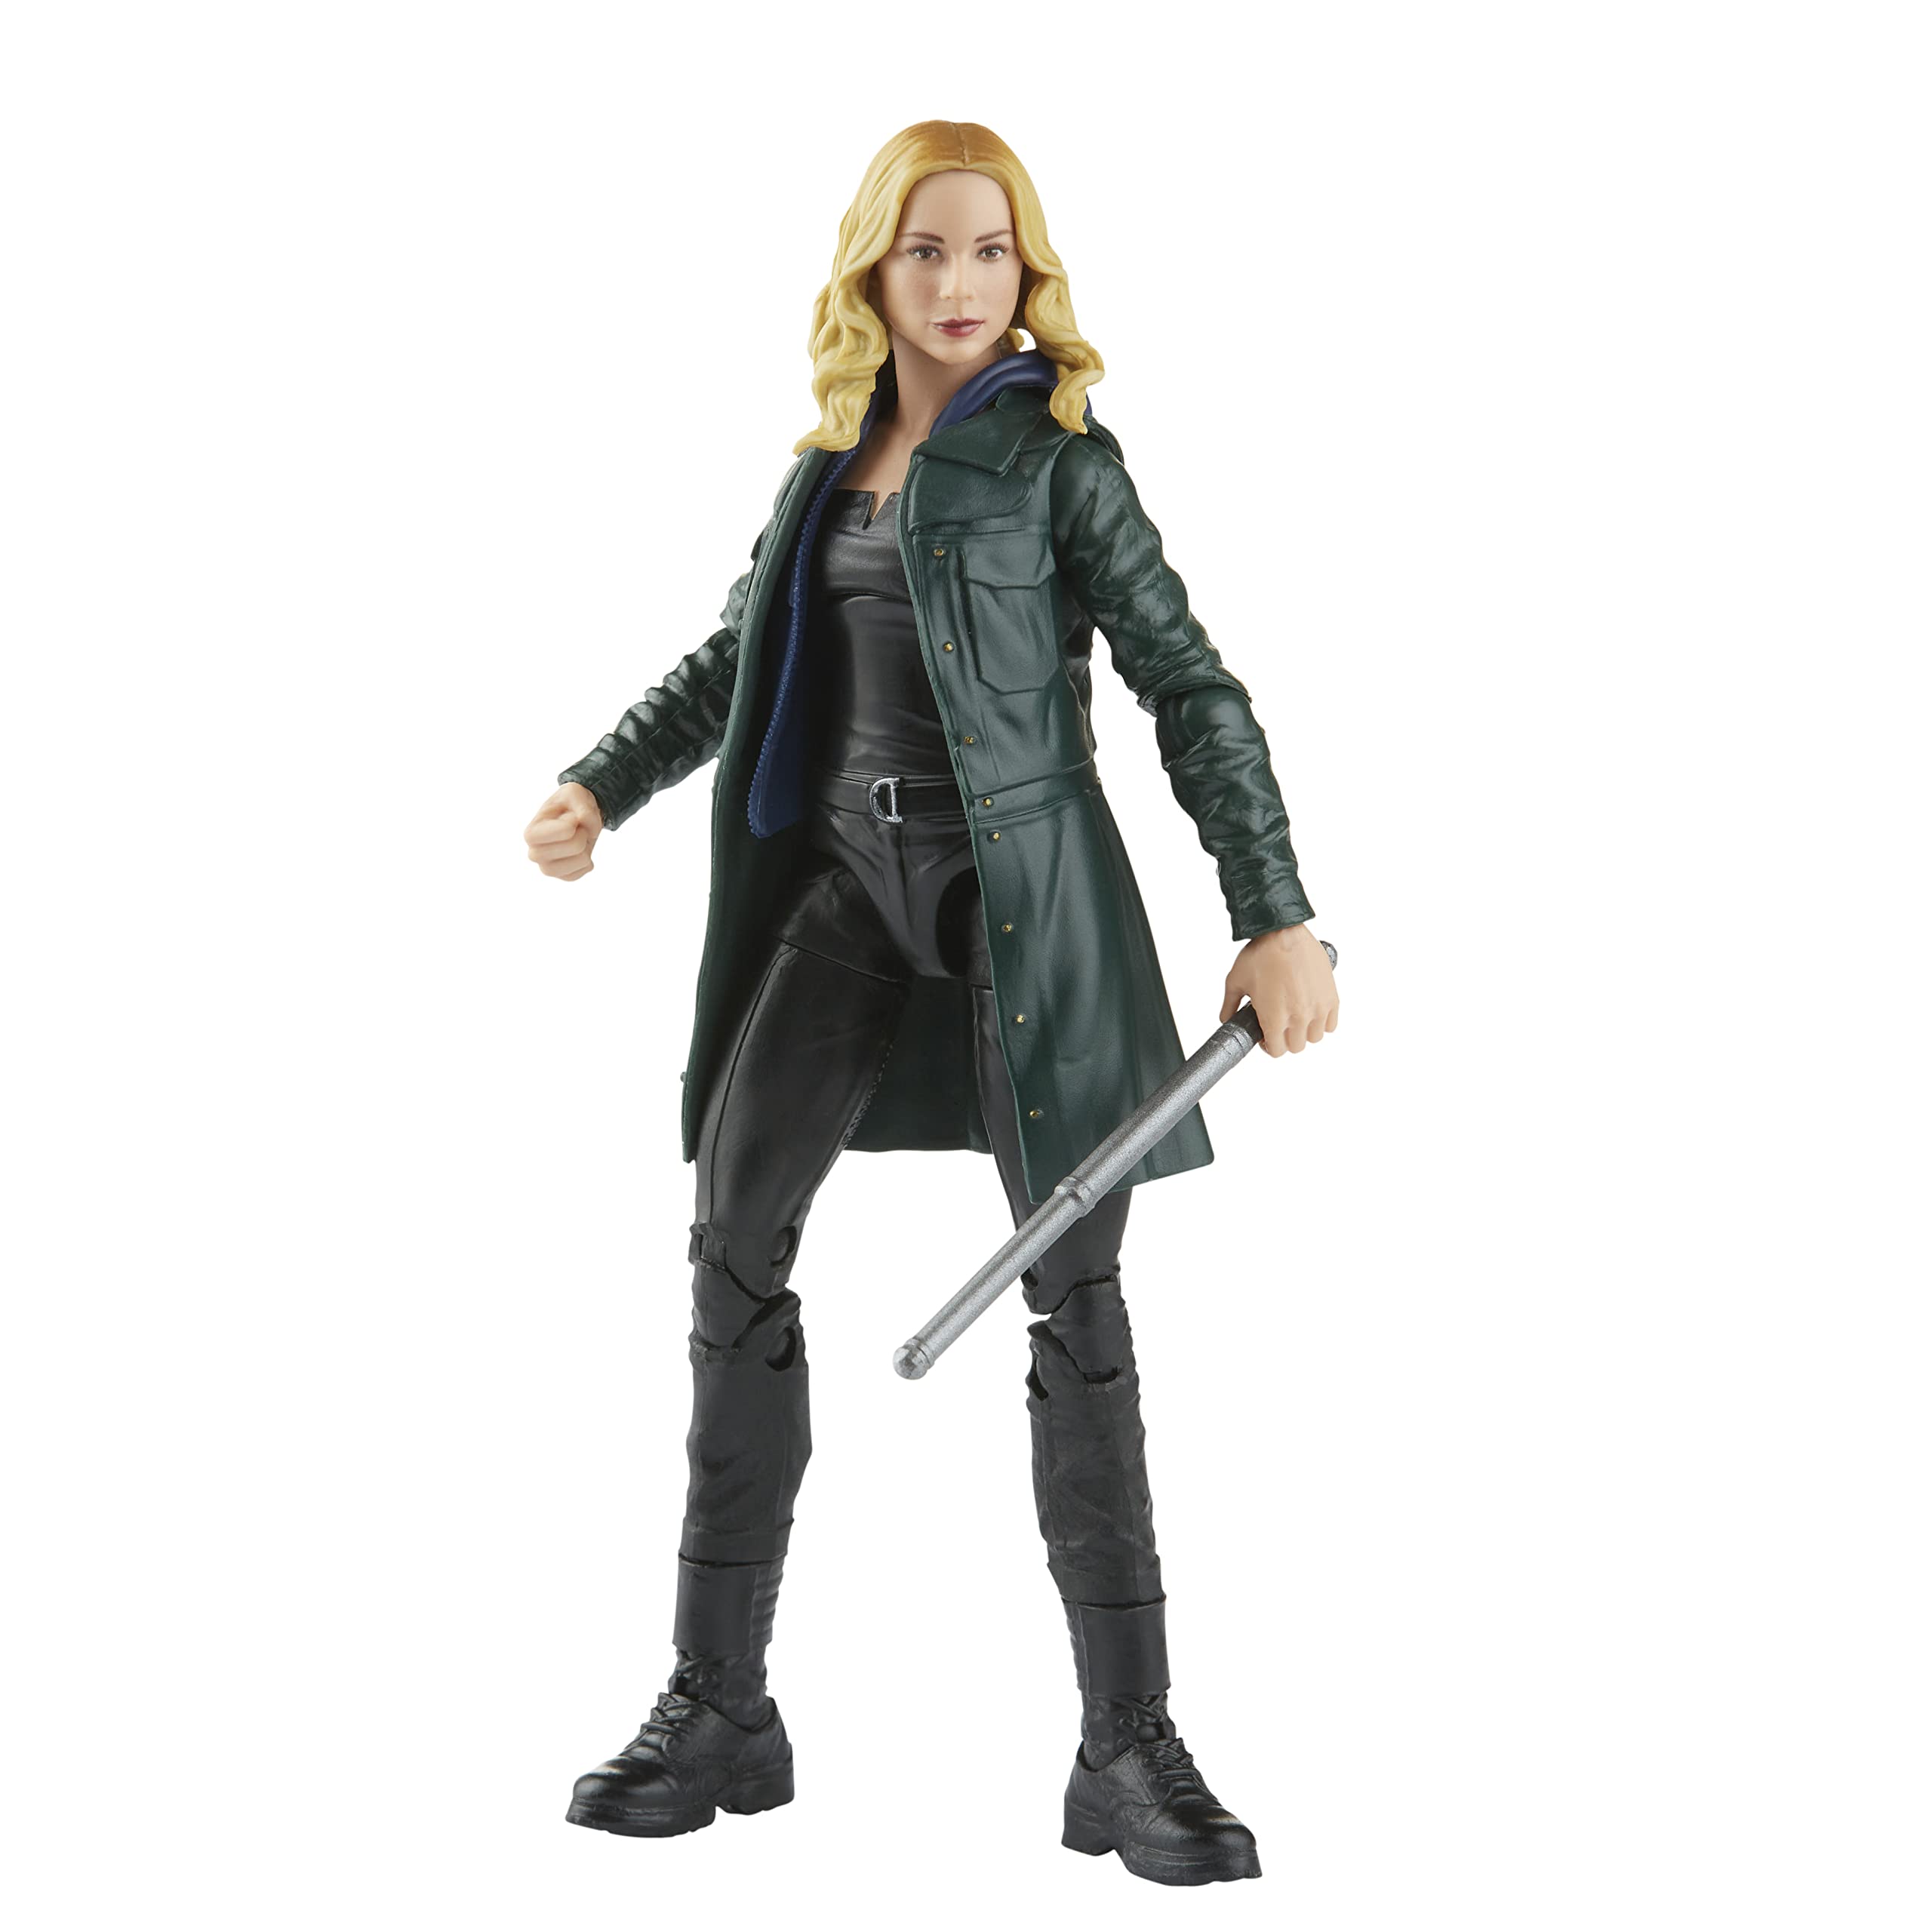 Marvel Avengers Legends Sharon Carter 6-inch Action Figure, Disney+ Series, MCU, Includes 4 Accessories & 2 Build-A-Figure Parts, F3860